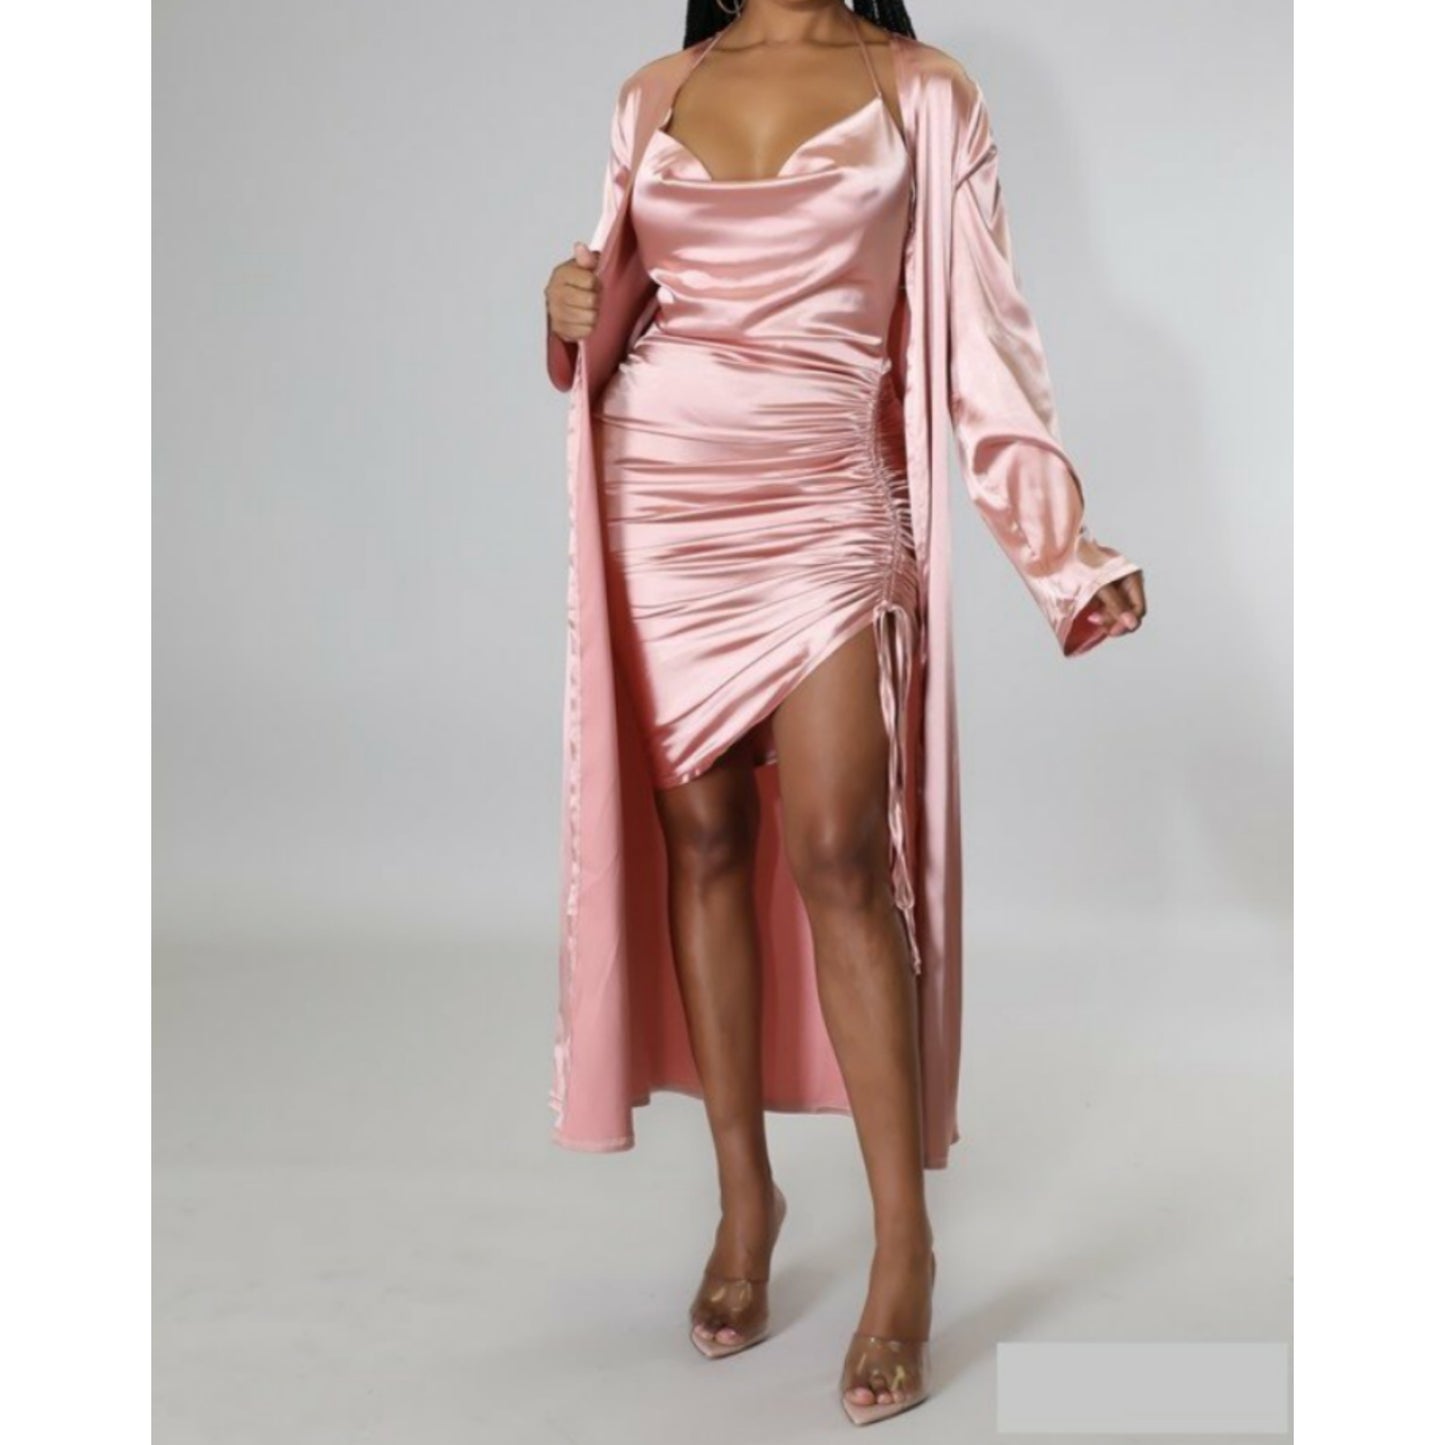 Malibu Midi Dress Set (2 Options)